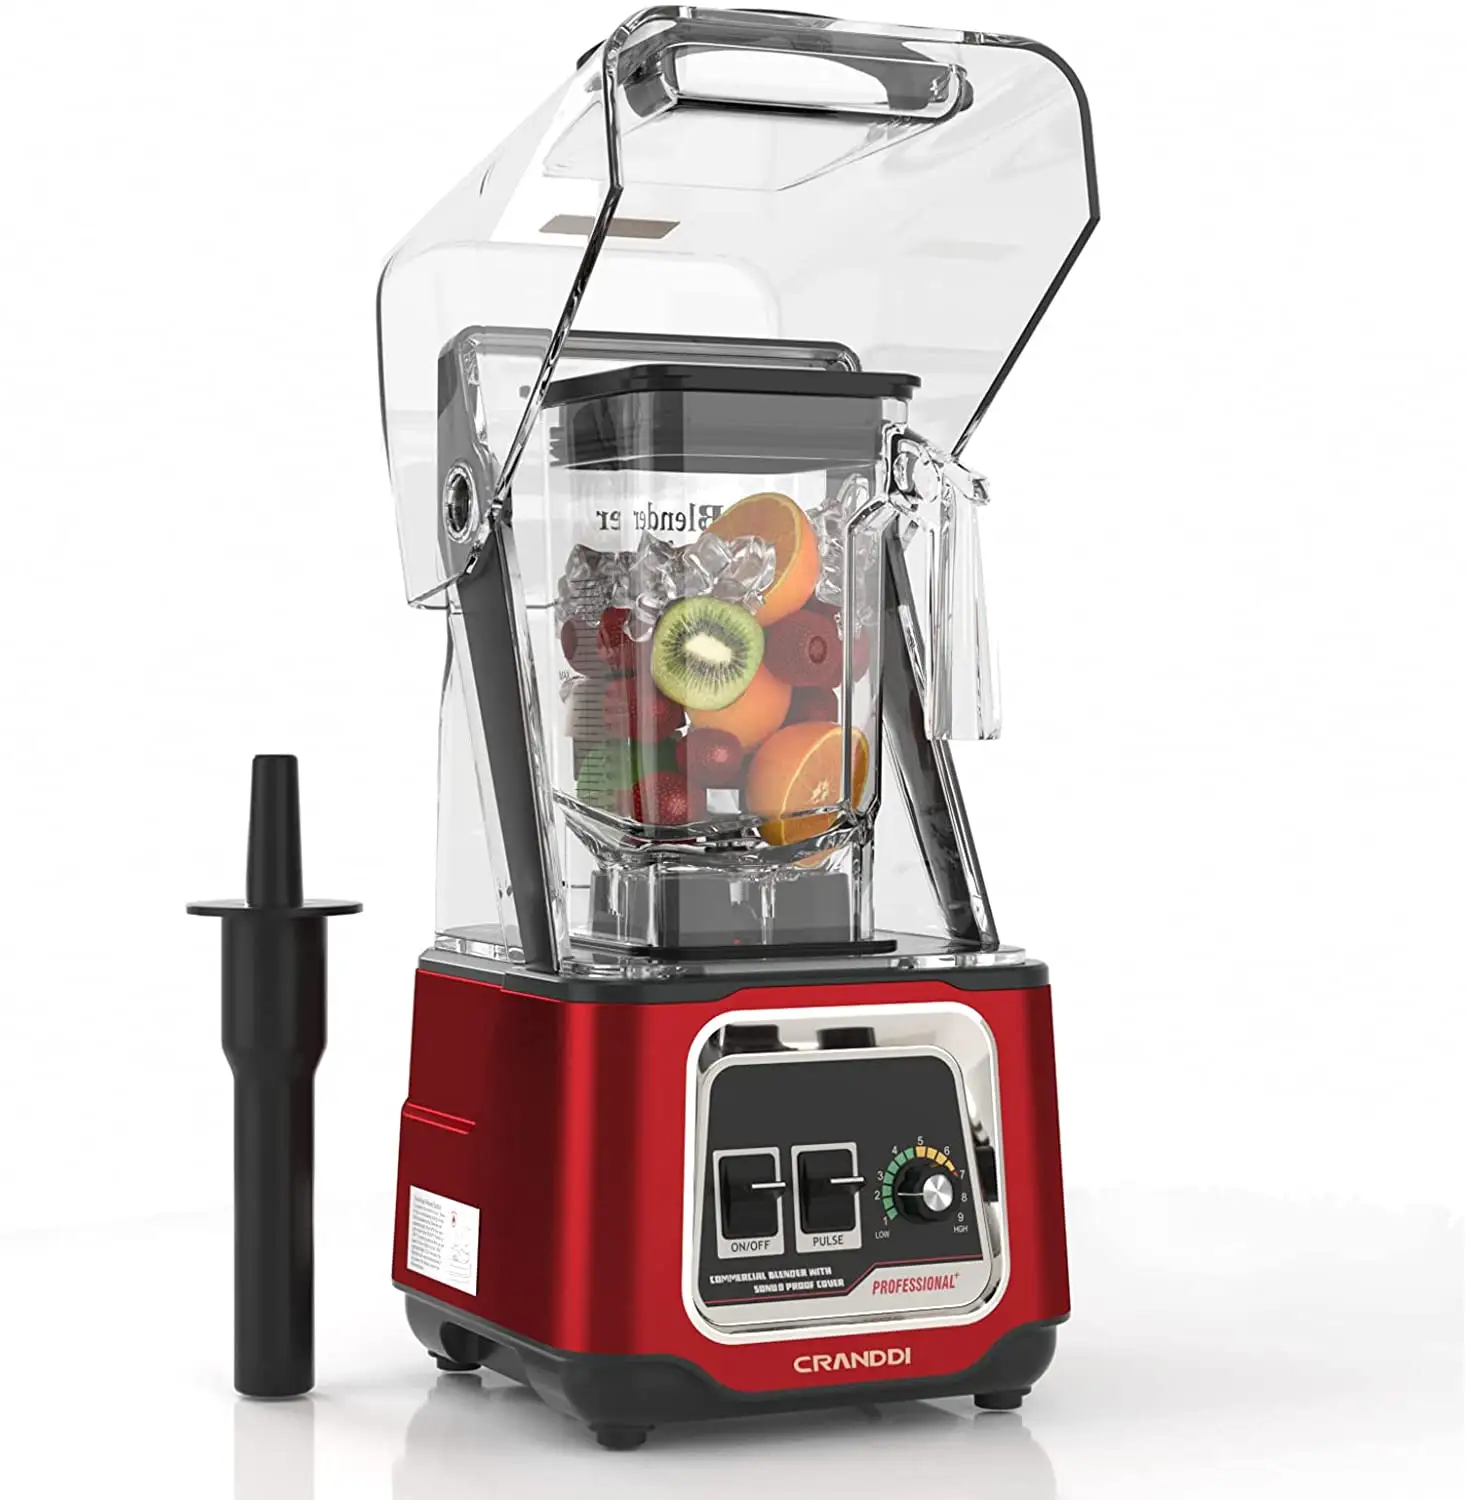 CRANDDI Frozen Fruit Smoothie Blender Machine Commercial Blender with Sound Cover